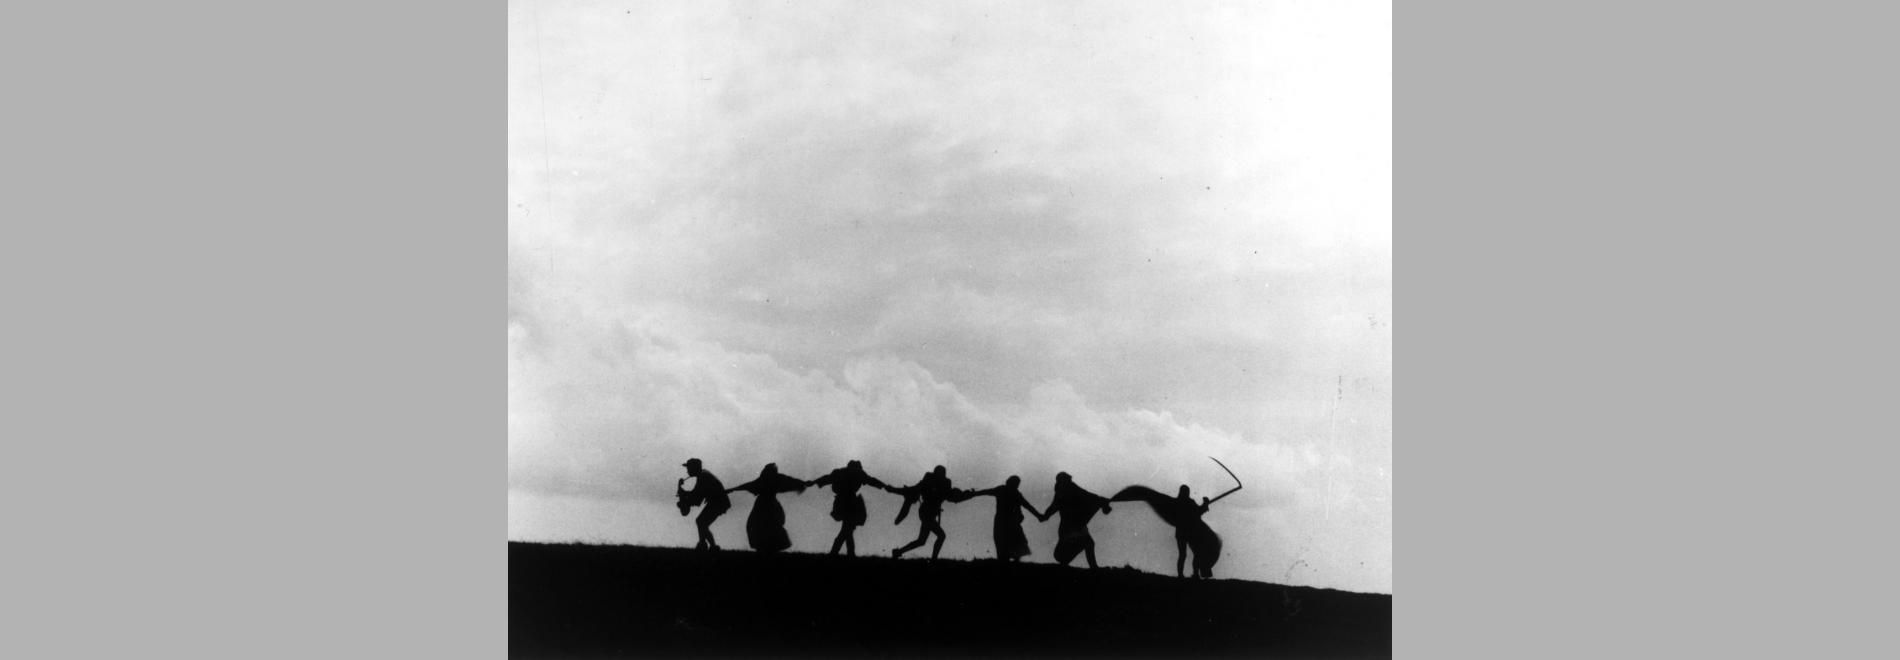 Det sjunde inseglet / el séptimo sello (Ingmar Bergman, 1956)